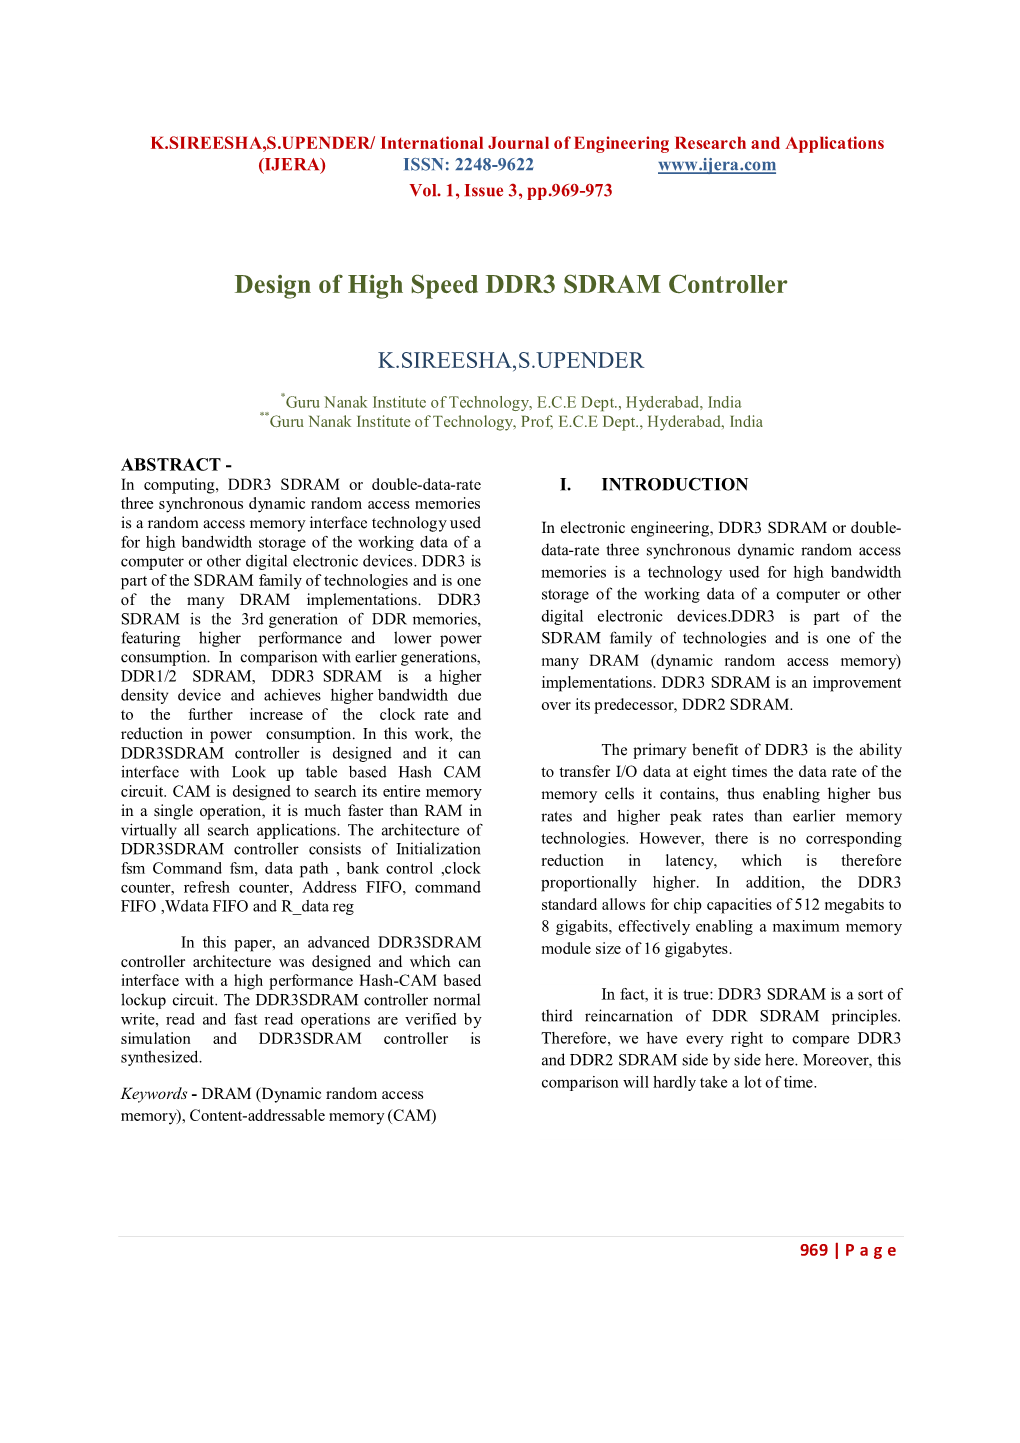 Design of High Speed DDR3 SDRAM Controller